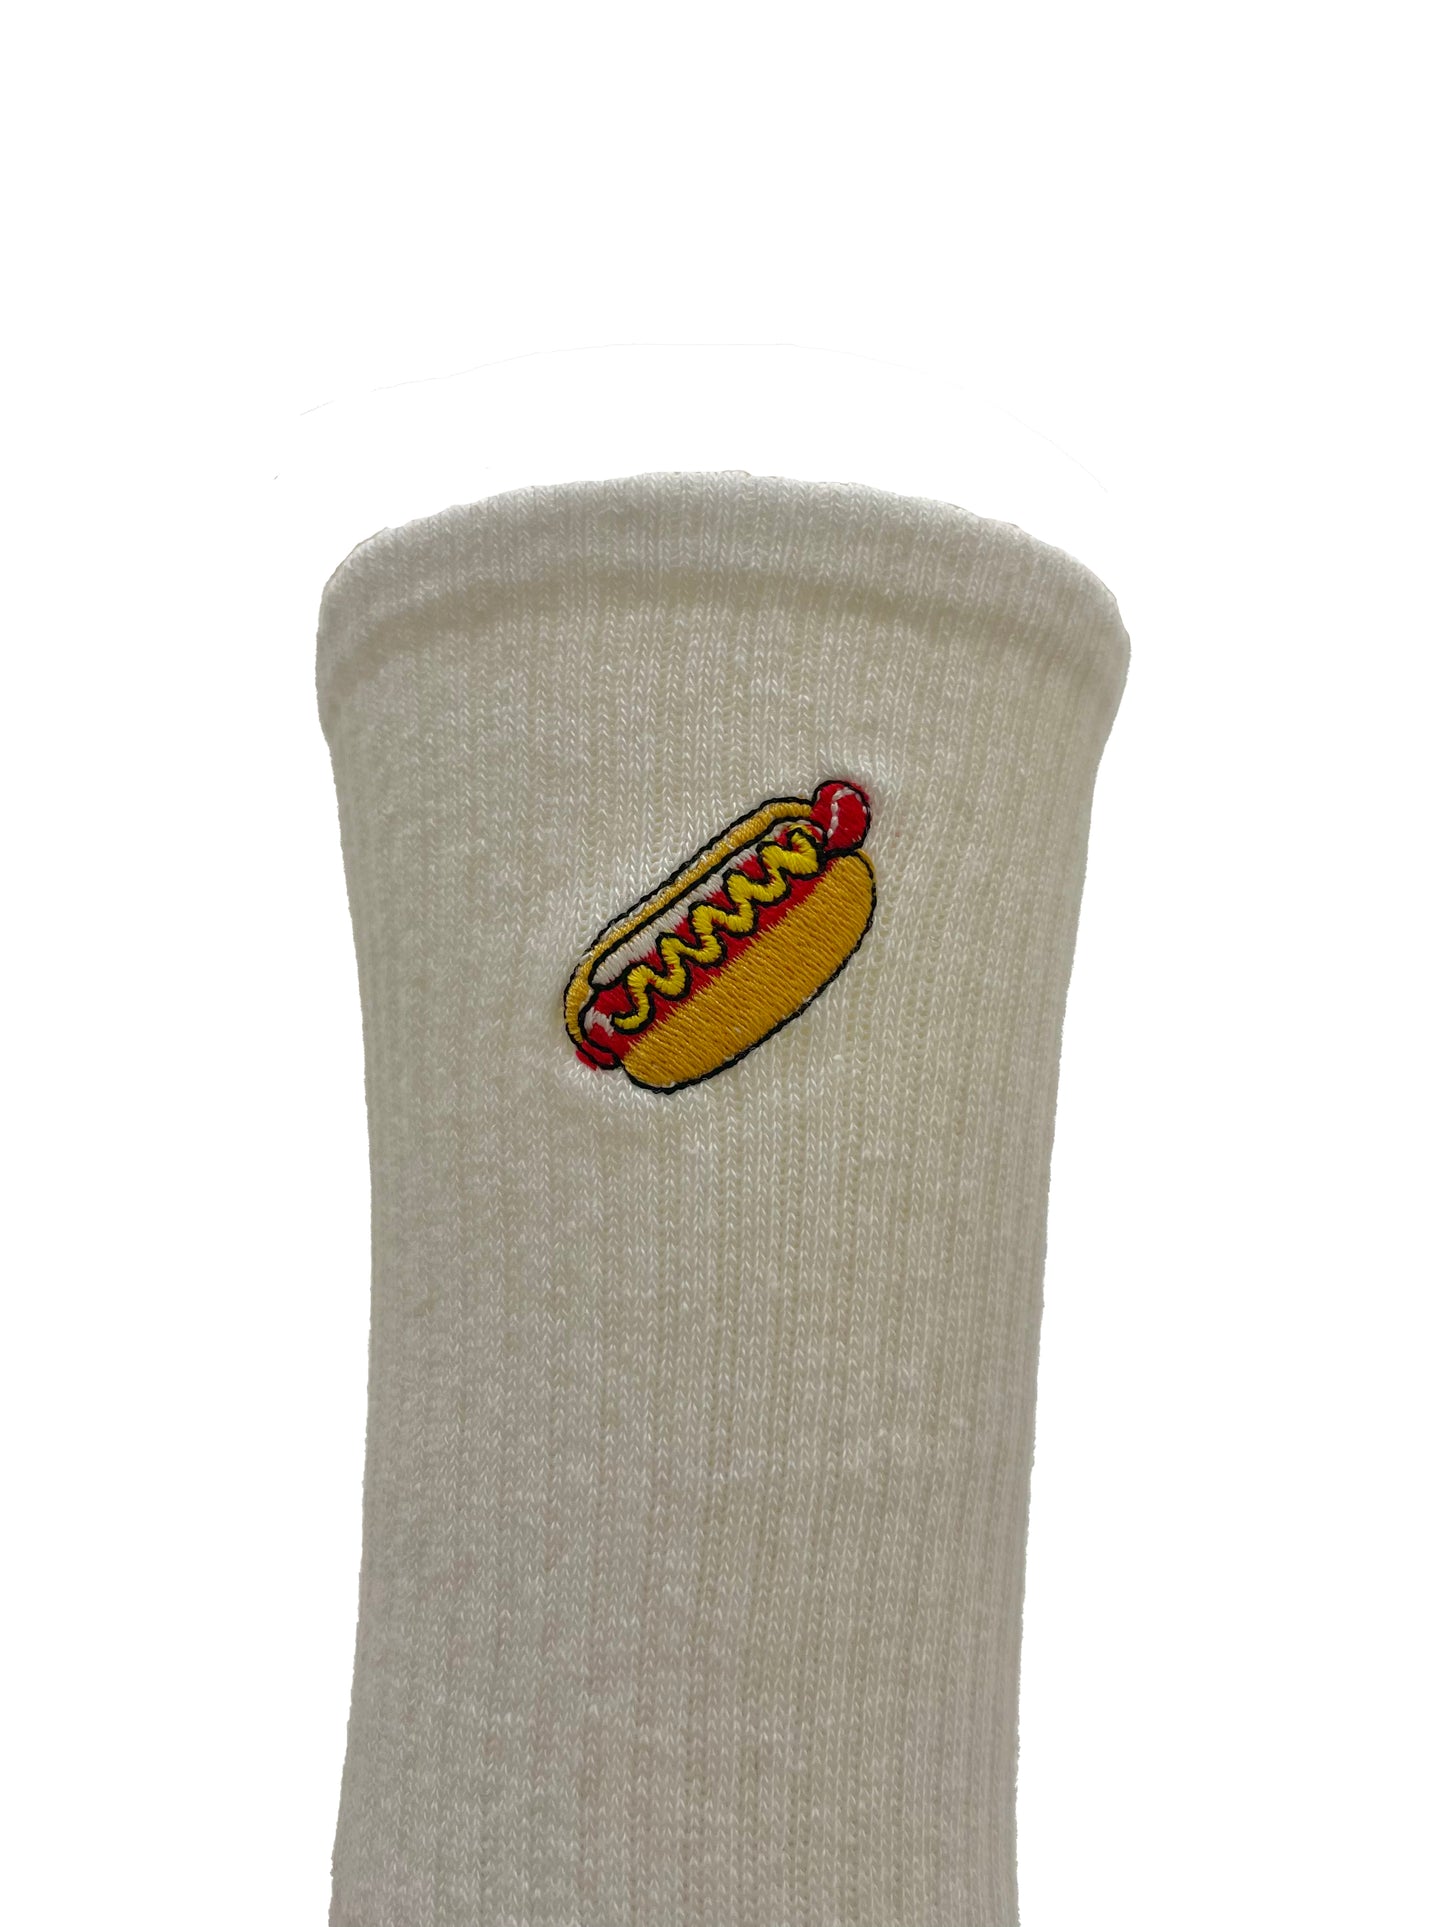 Embroidered Hotdog